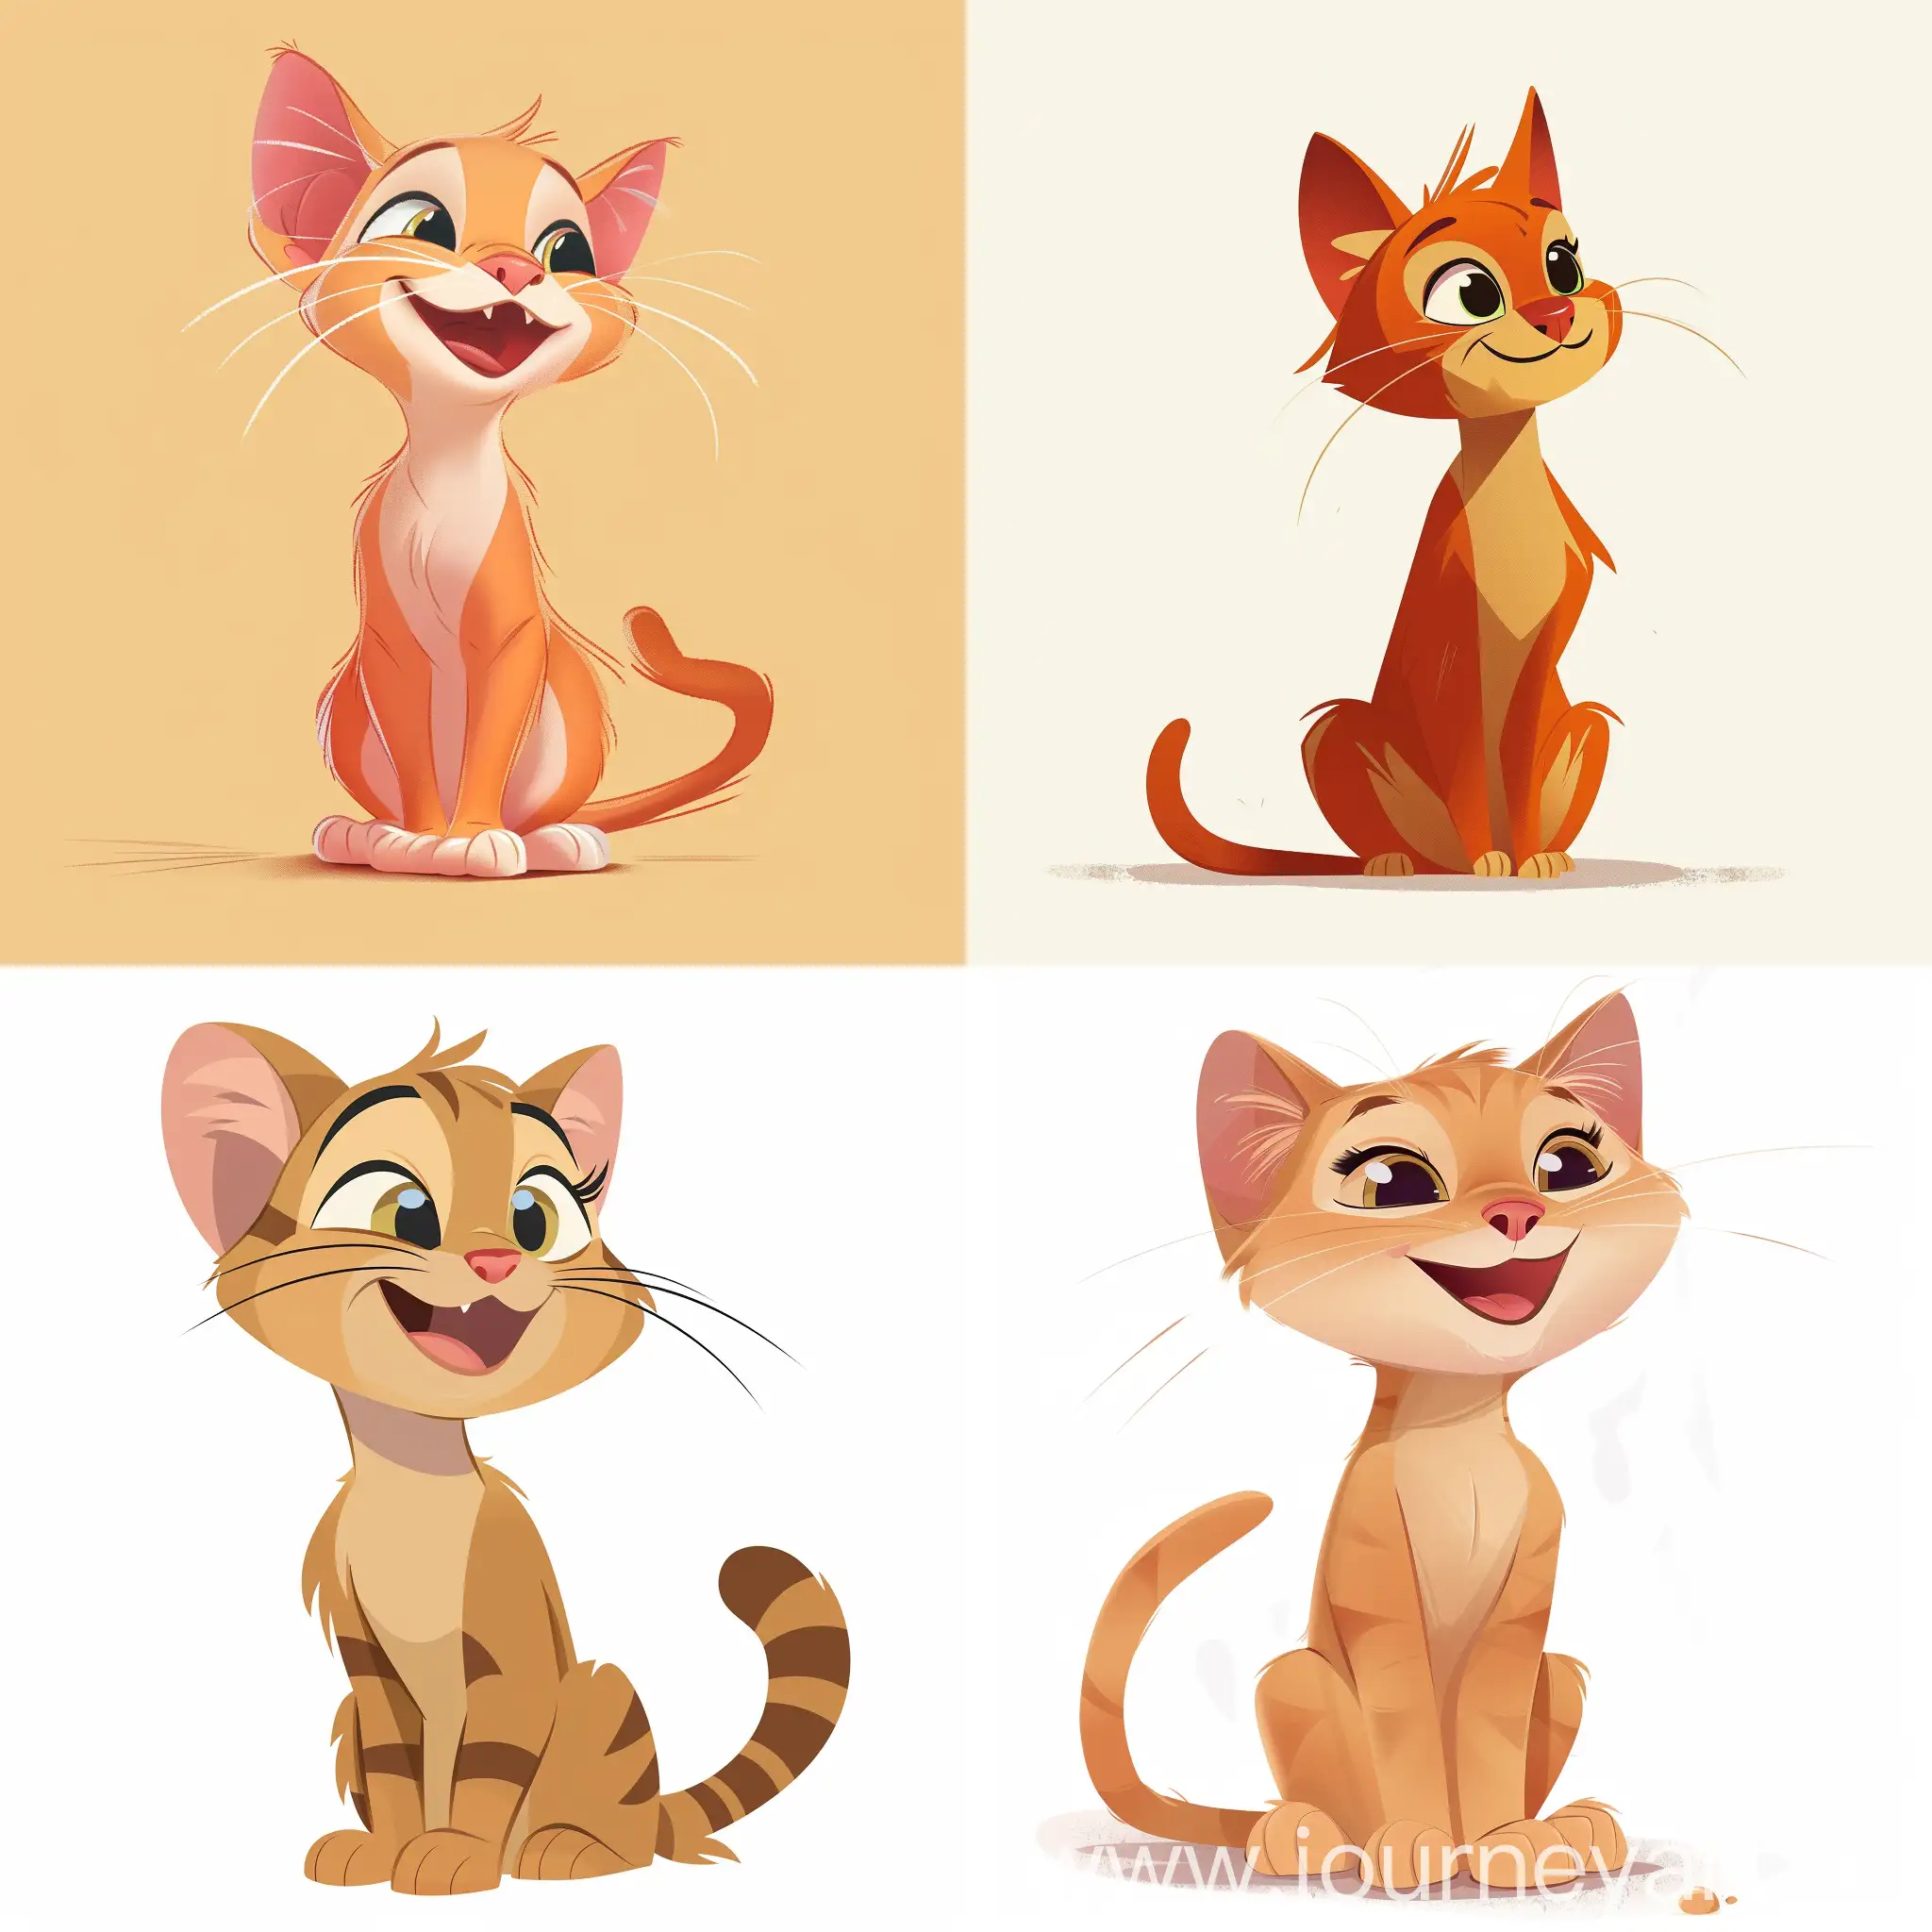 Joyful-Disney-Young-Cat-in-Flat-Style-Illustration